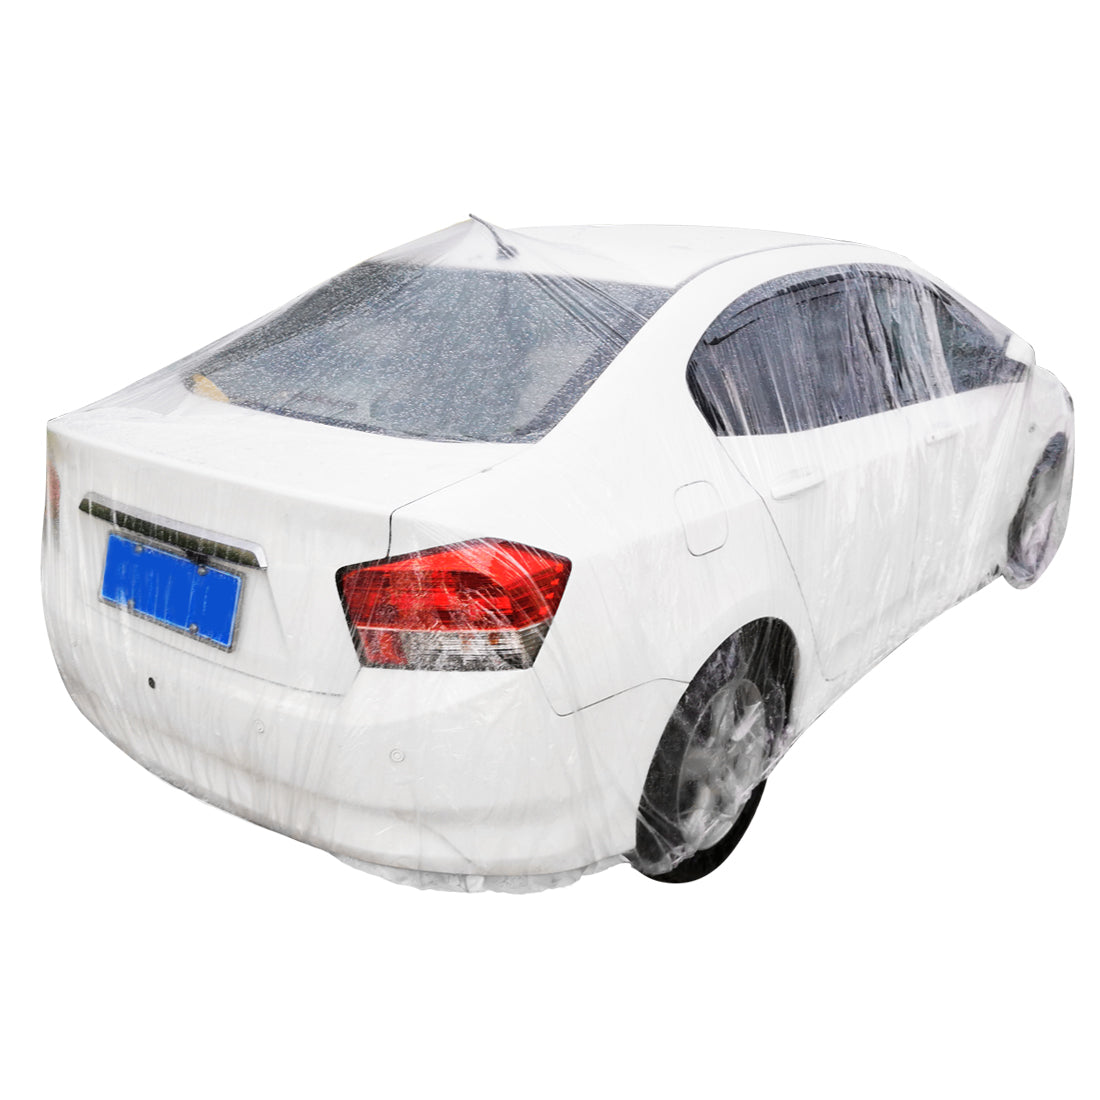 X AUTOHAUX Plastic Car Cover Shield Rain Snow Hail Dust Universal for Car SUV